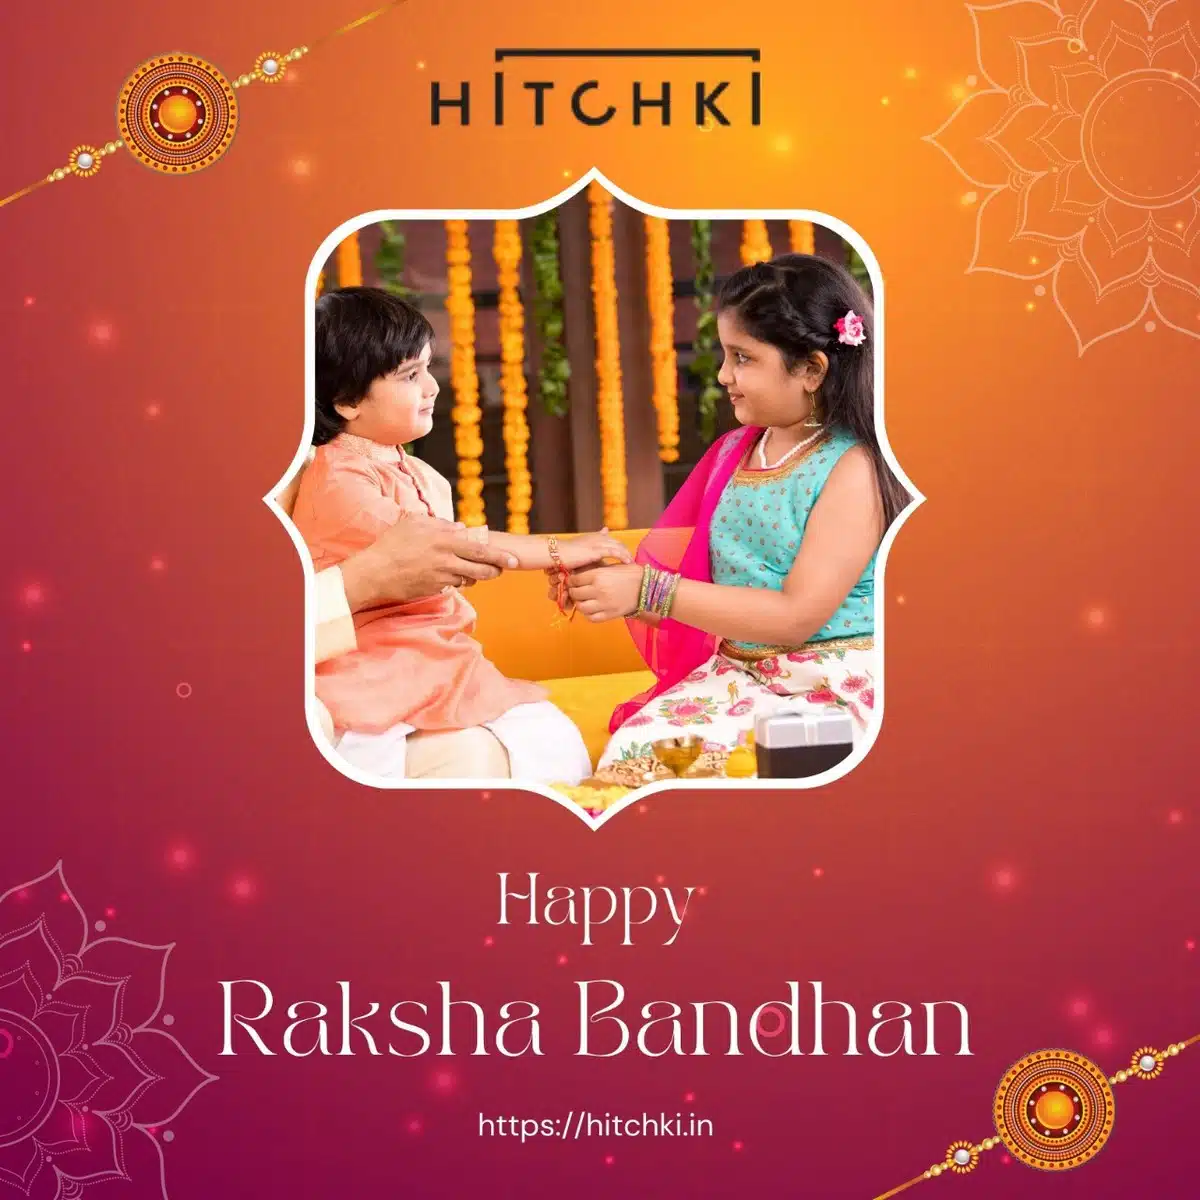 Hitchki Wishes You All A Very Happy Raksha Bandhan